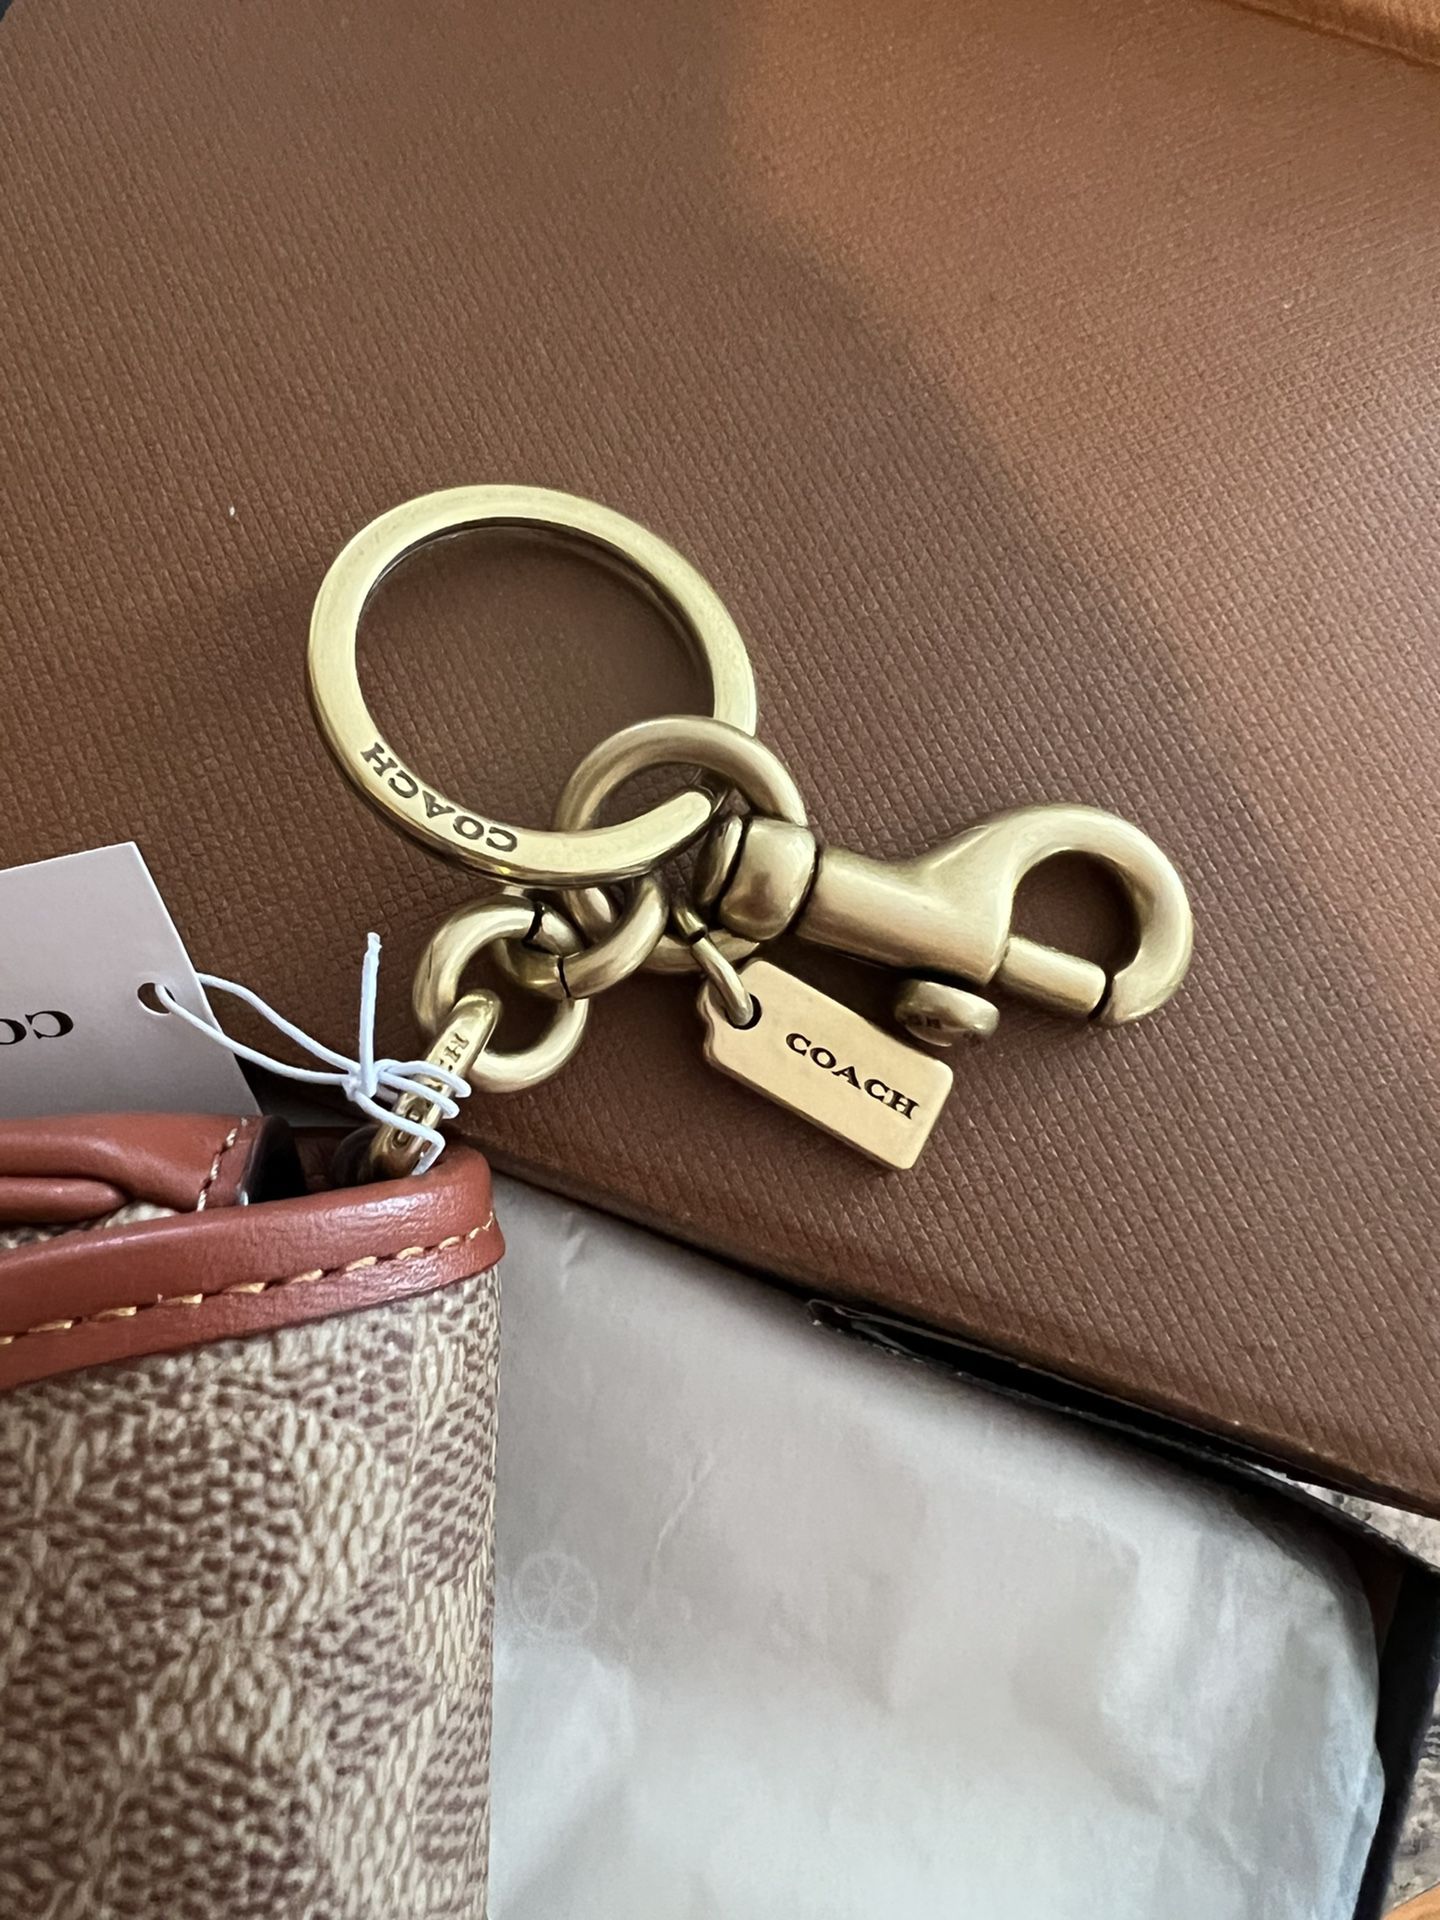 Coach, Accessories, Coach Signature Loop Key Fob Keychain Bag Charm